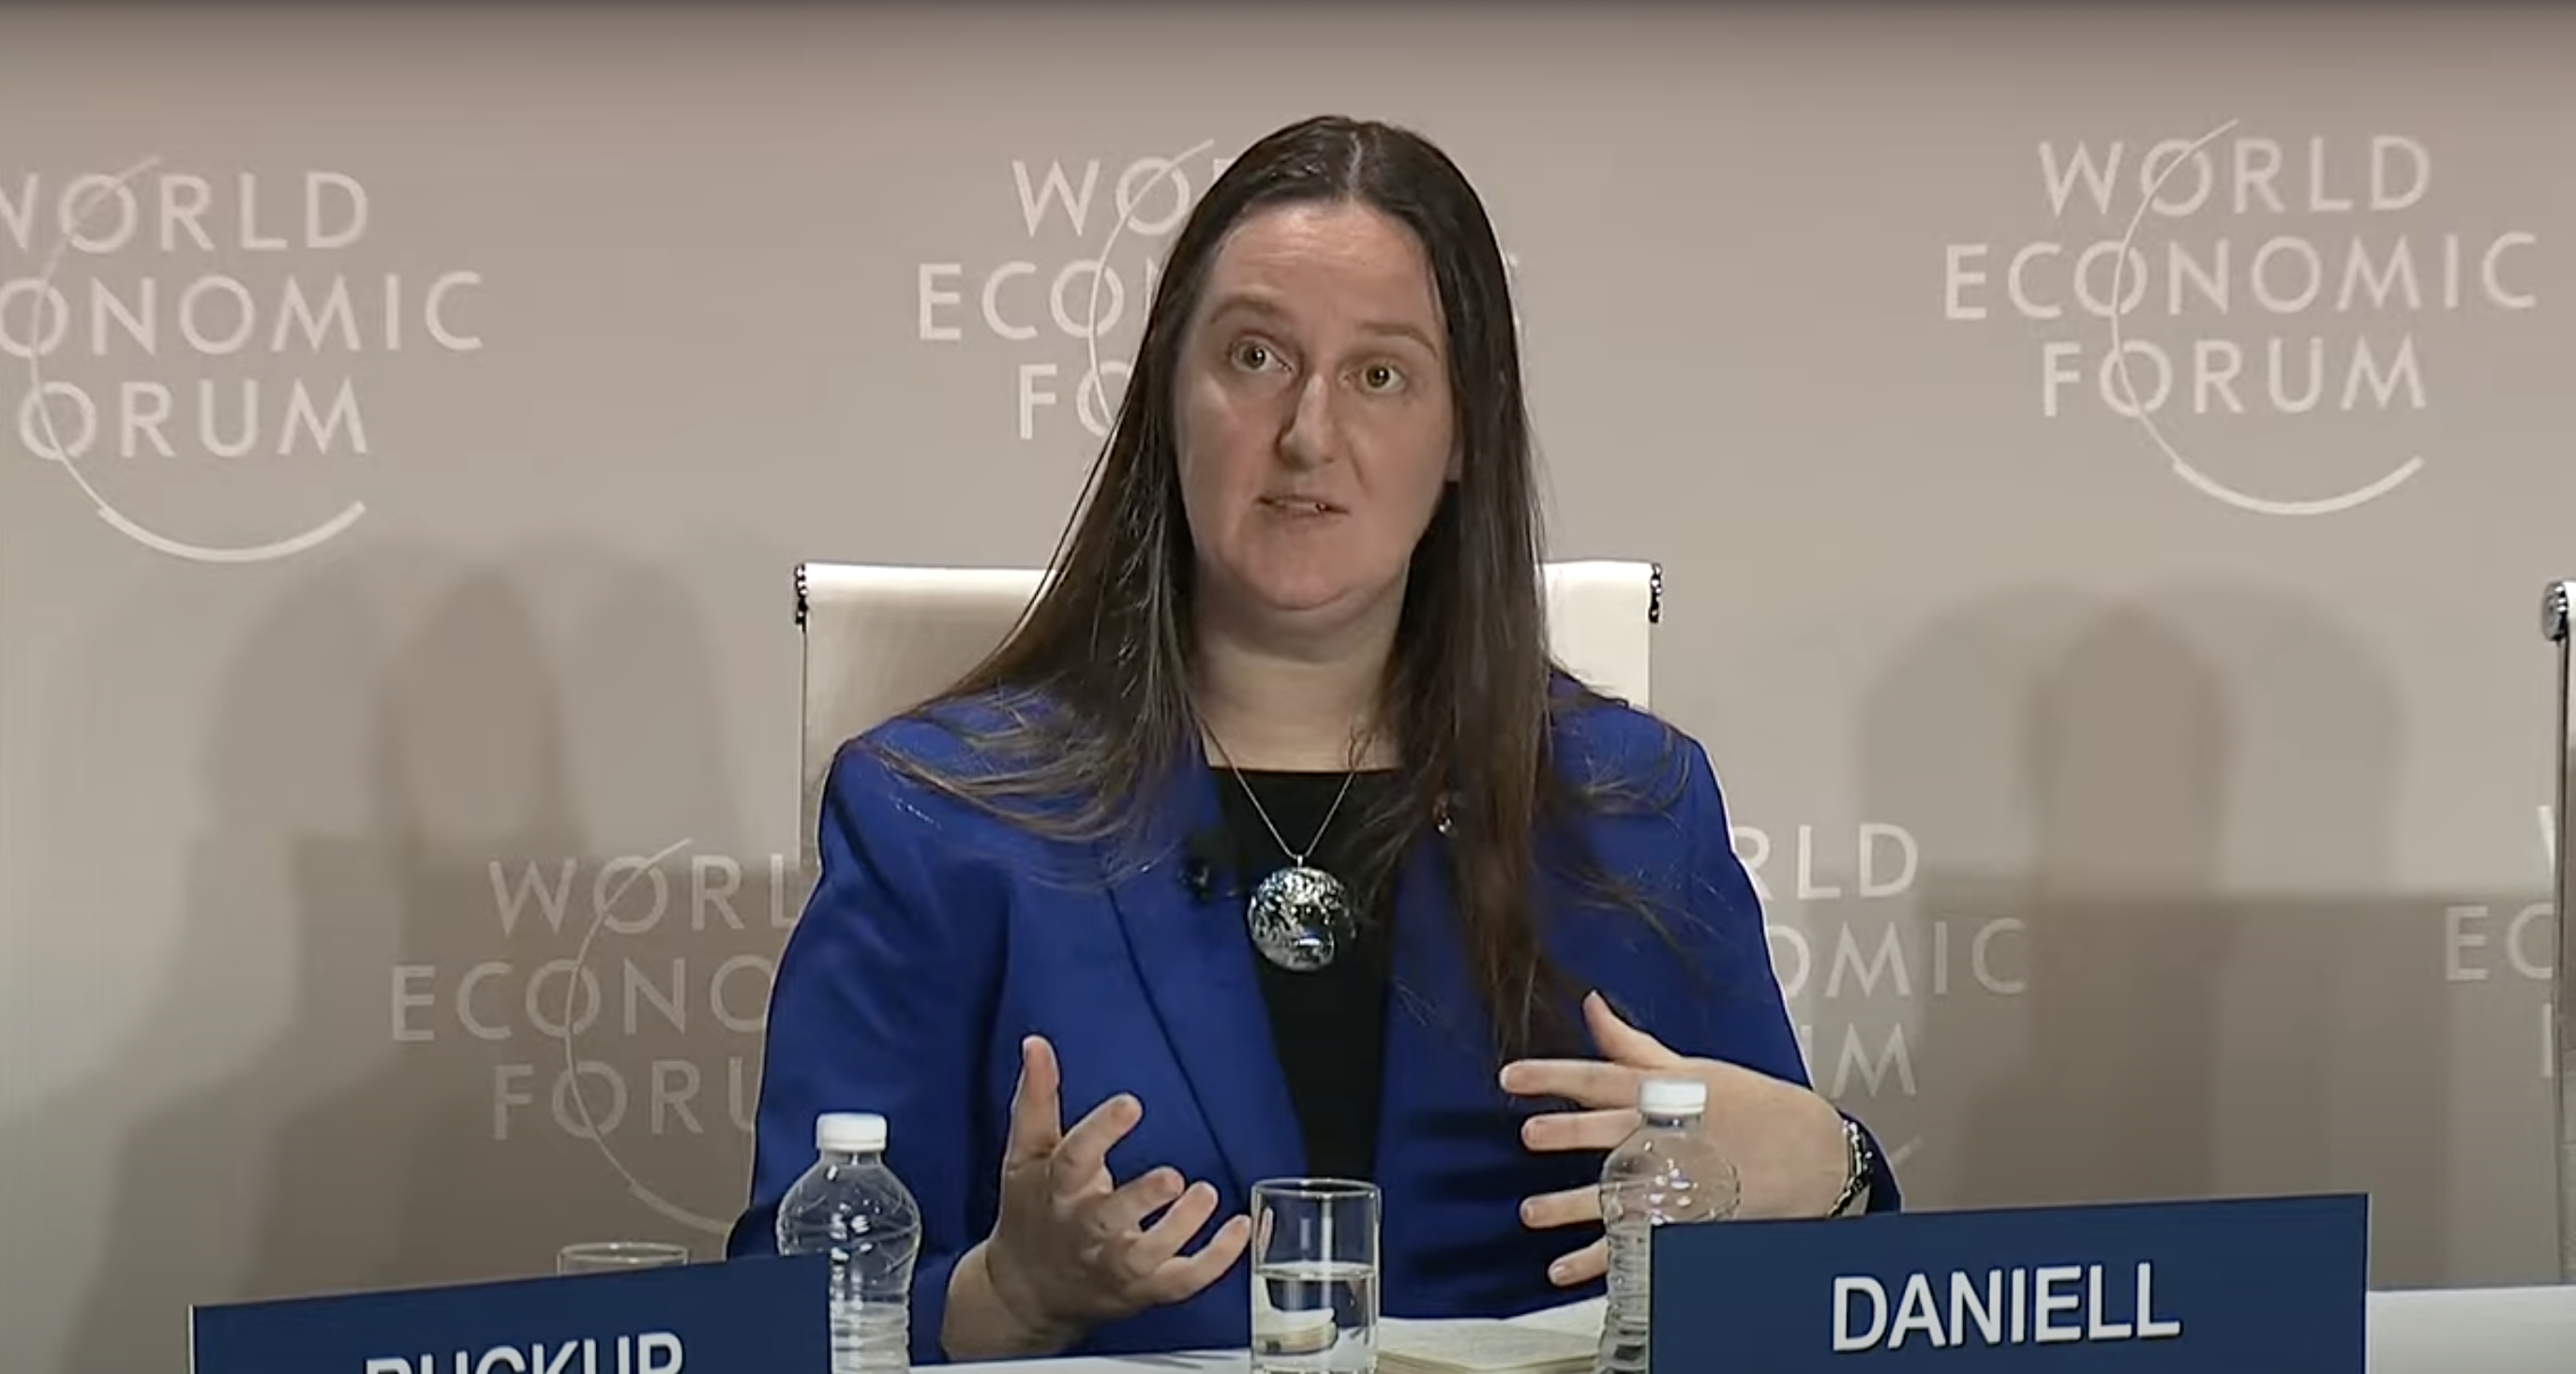 Katherine Daniell speaking at the World Economic Forum, China
